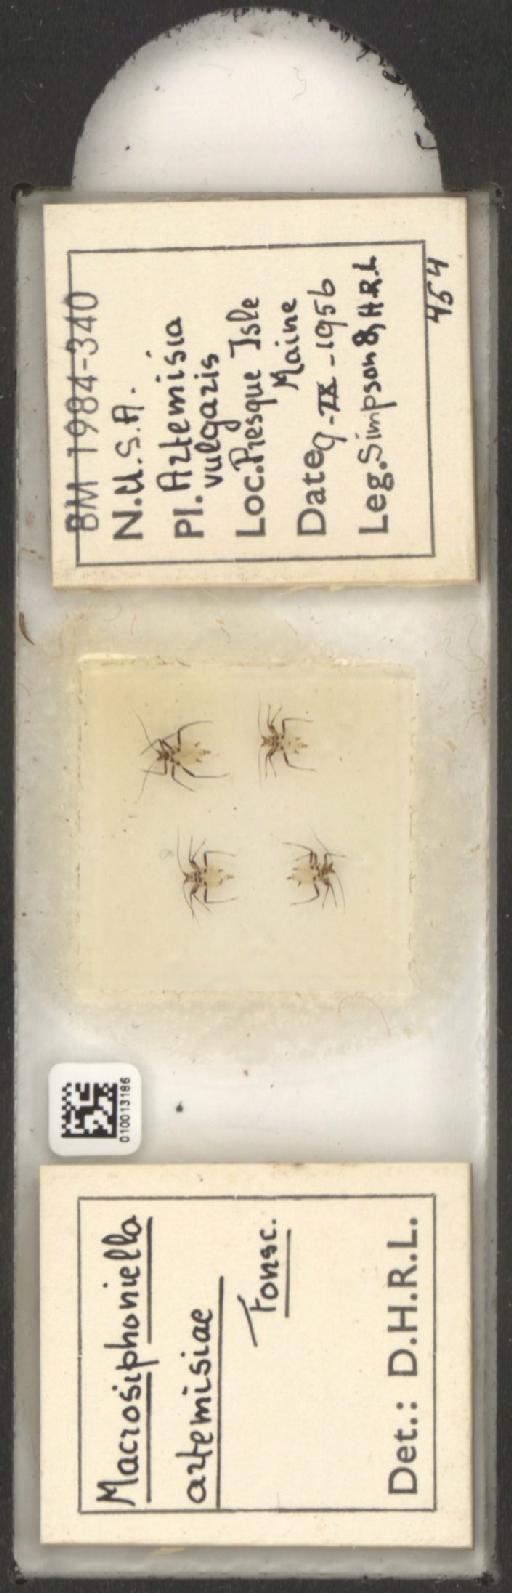 Macrosiphoniella artemisiae Fonscolombe, 1841 - 010013186_112659_1094715